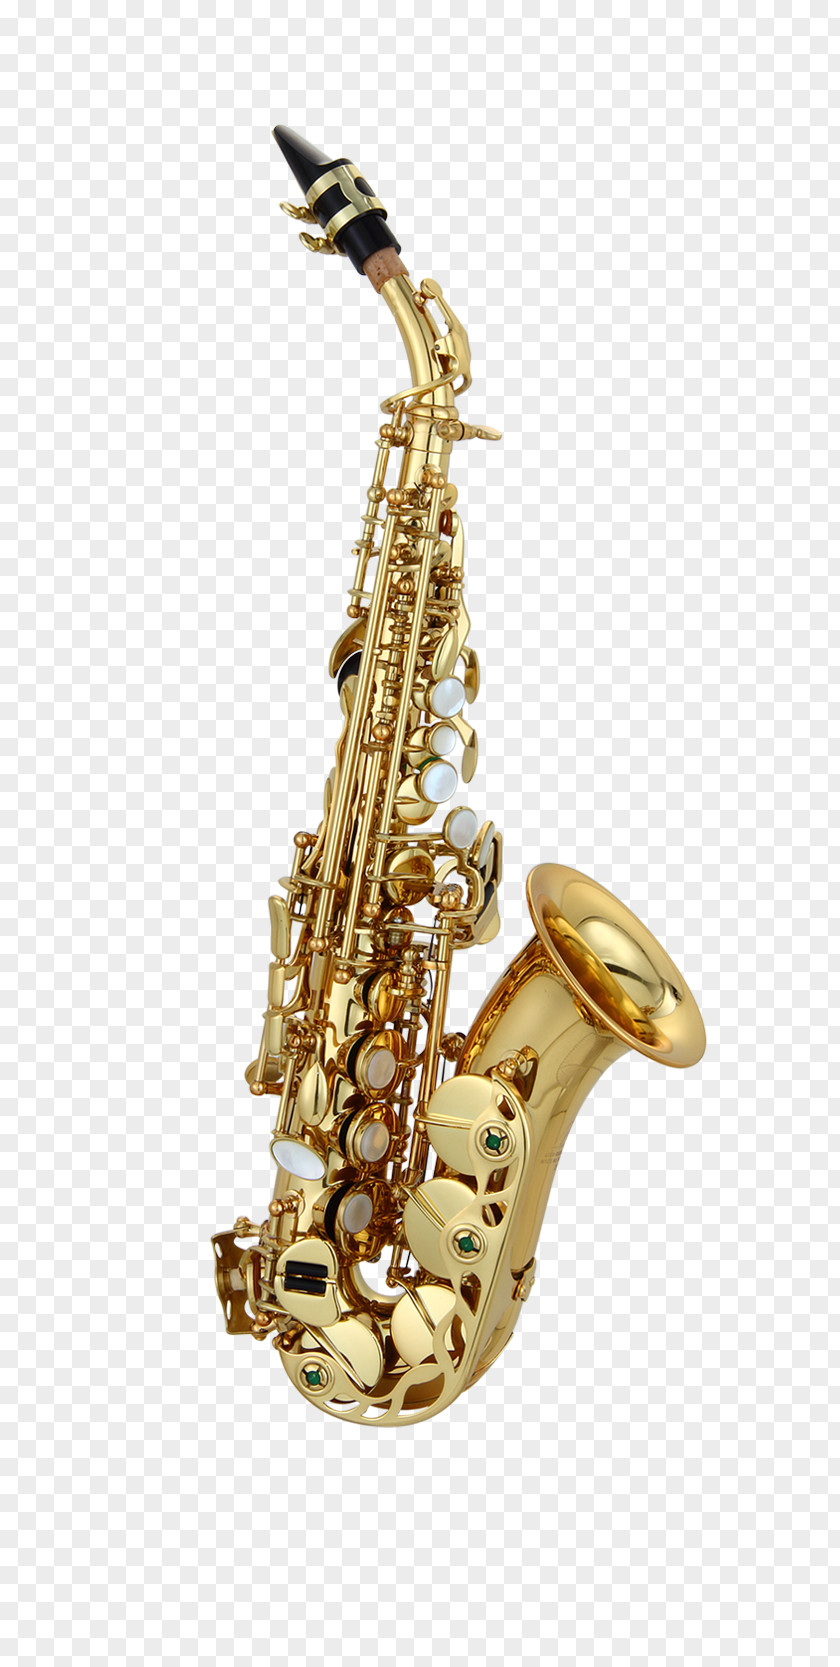 Saxophon Baritone Saxophone Woodwind Instrument Musical Instruments Brass PNG